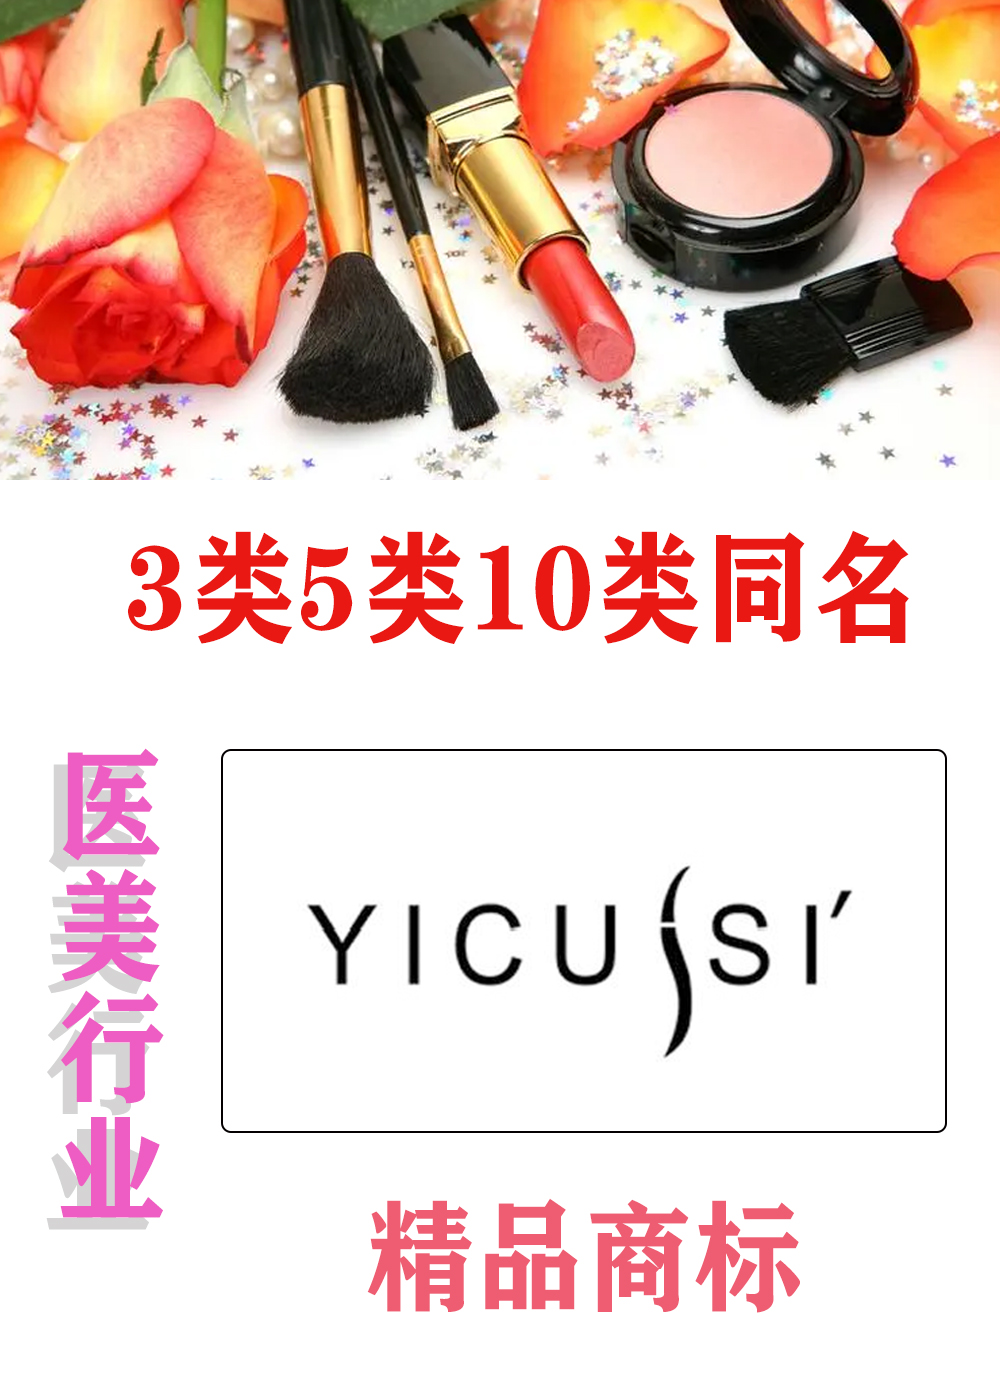 YICUISI 3+5+10类.jpg